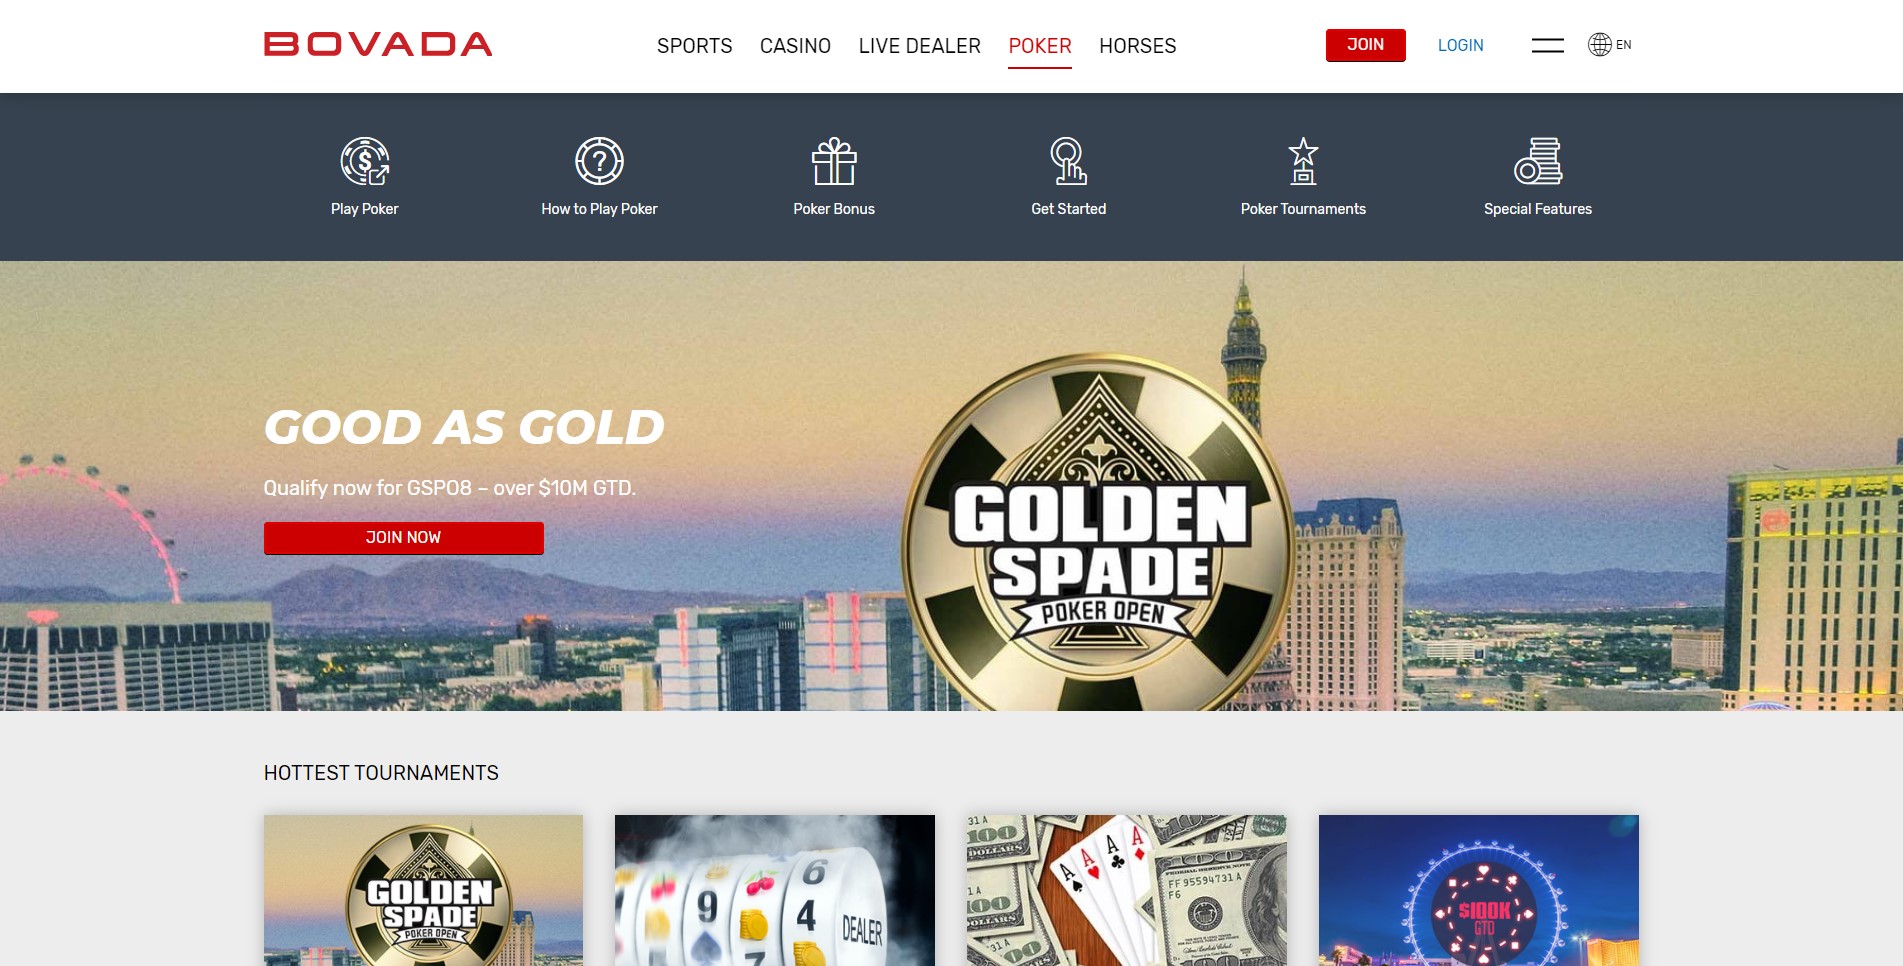 Bovada’s poker room homepage